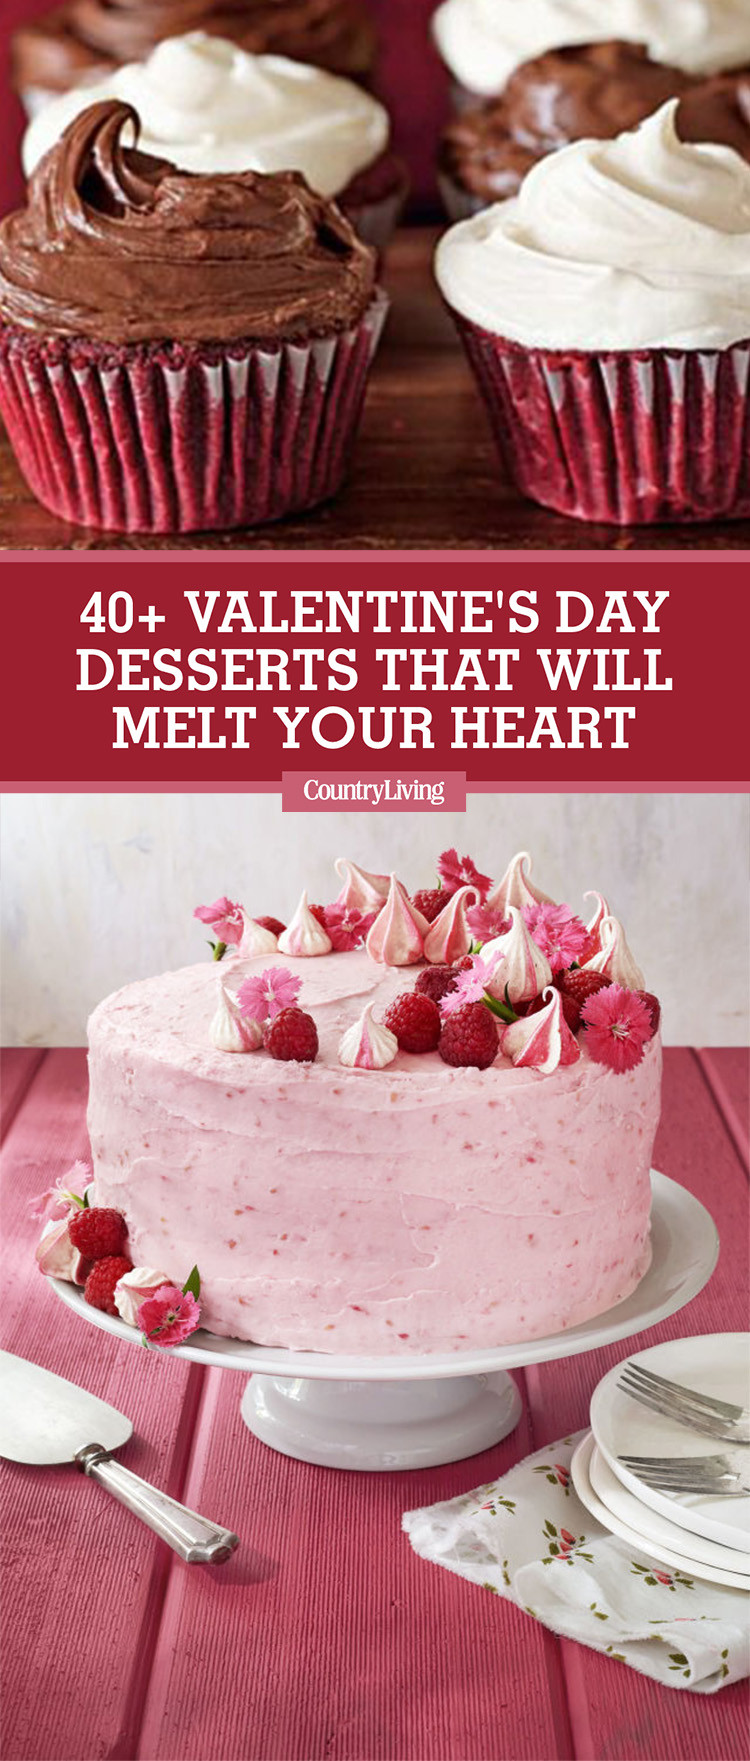 Valentine Desserts Recipes
 42 Easy Valentine’s Day Desserts Best Recipes for